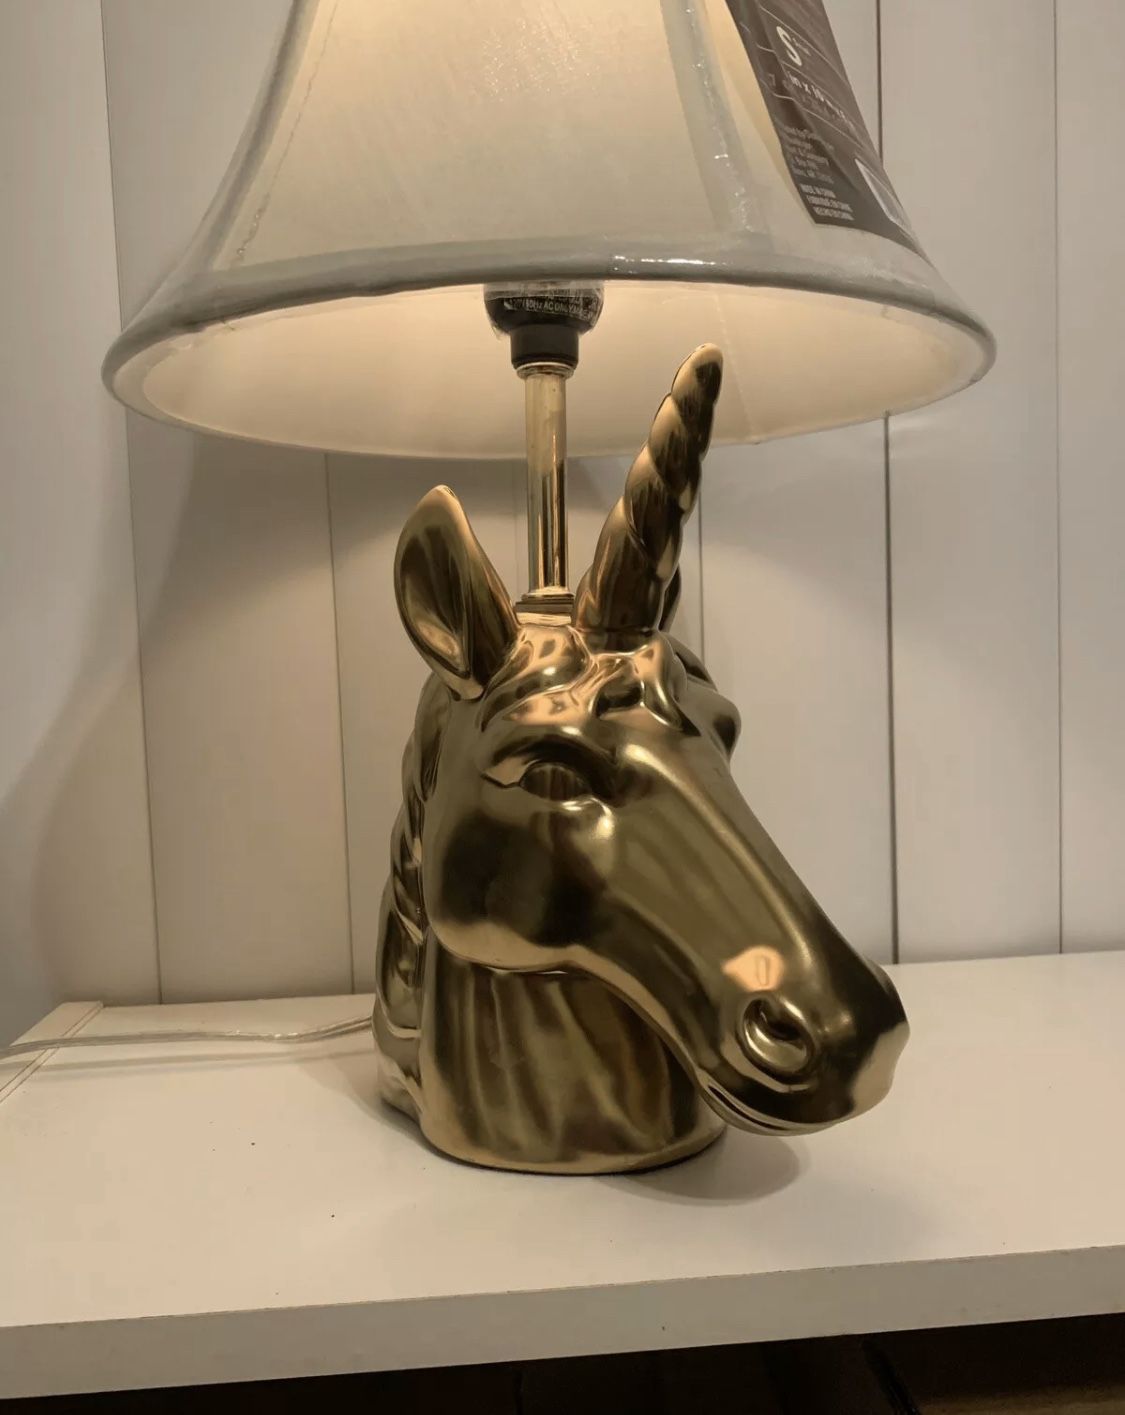 Unicorn lamp